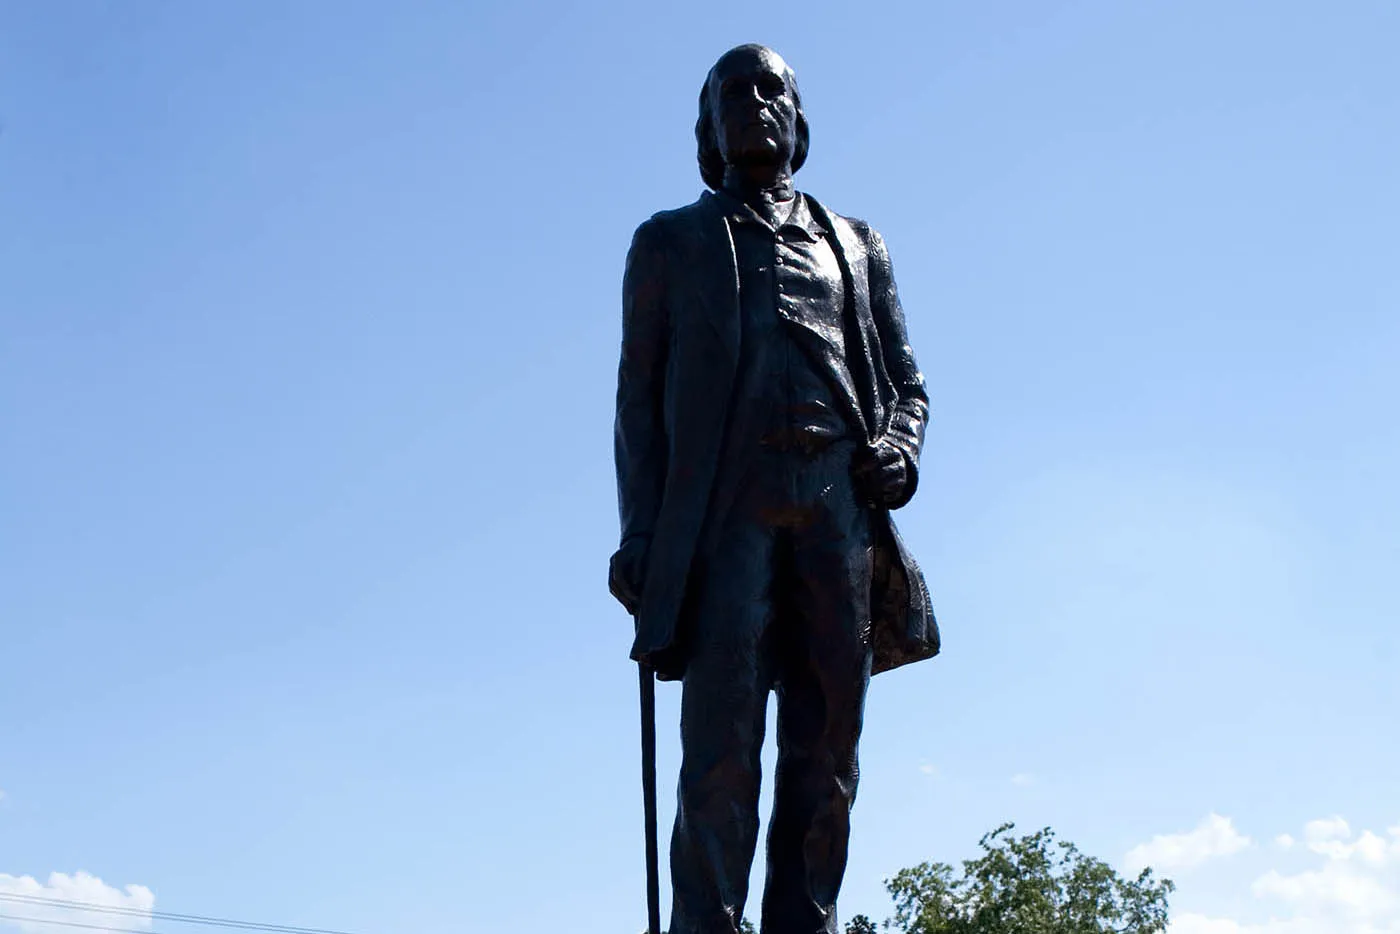 Statue of John Warwick Thomas, founder of Thomasville, North Carolina